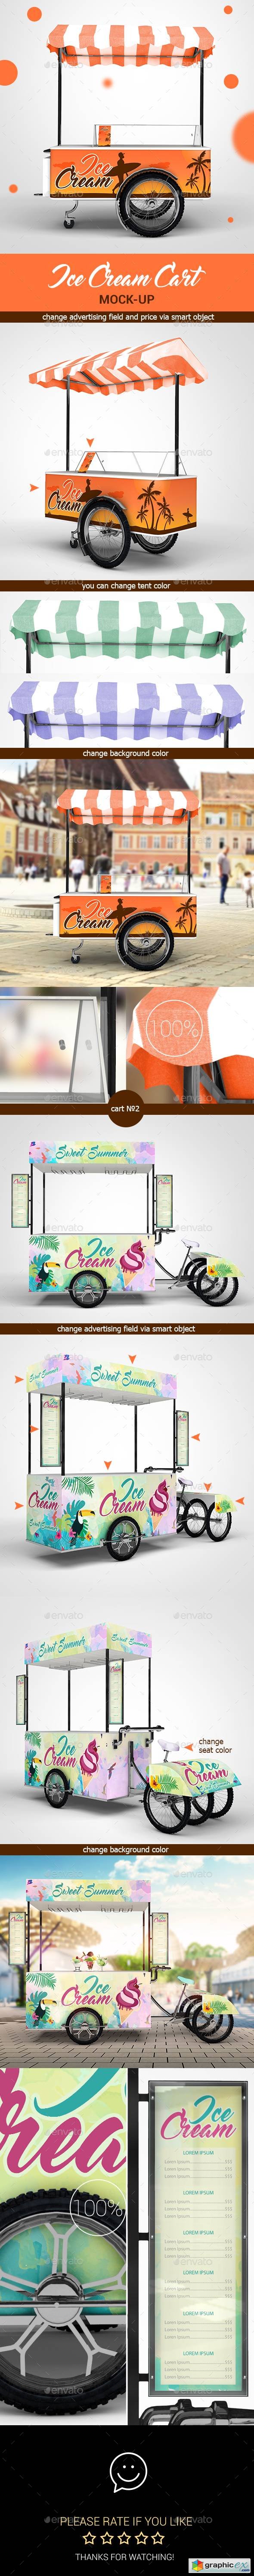 Ice Cream Cart Mock-Up